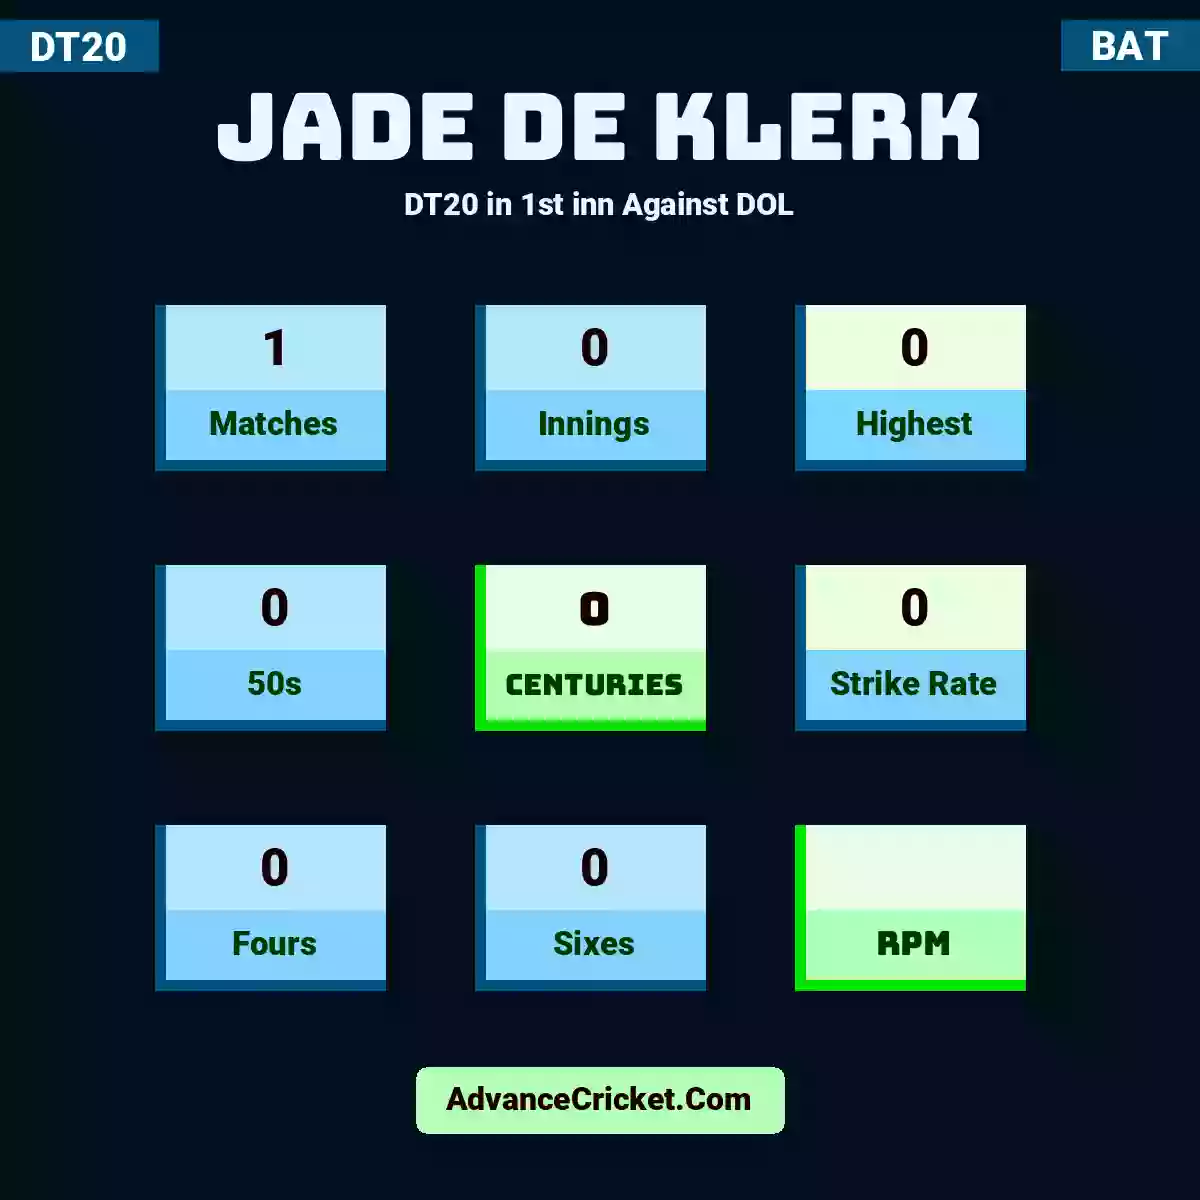 Jade de Klerk DT20  in 1st inn Against DOL, Jade de Klerk played 1 matches, scored 0 runs as highest, 0 half-centuries, and 0 centuries, with a strike rate of 0. J.Klerk hit 0 fours and 0 sixes.